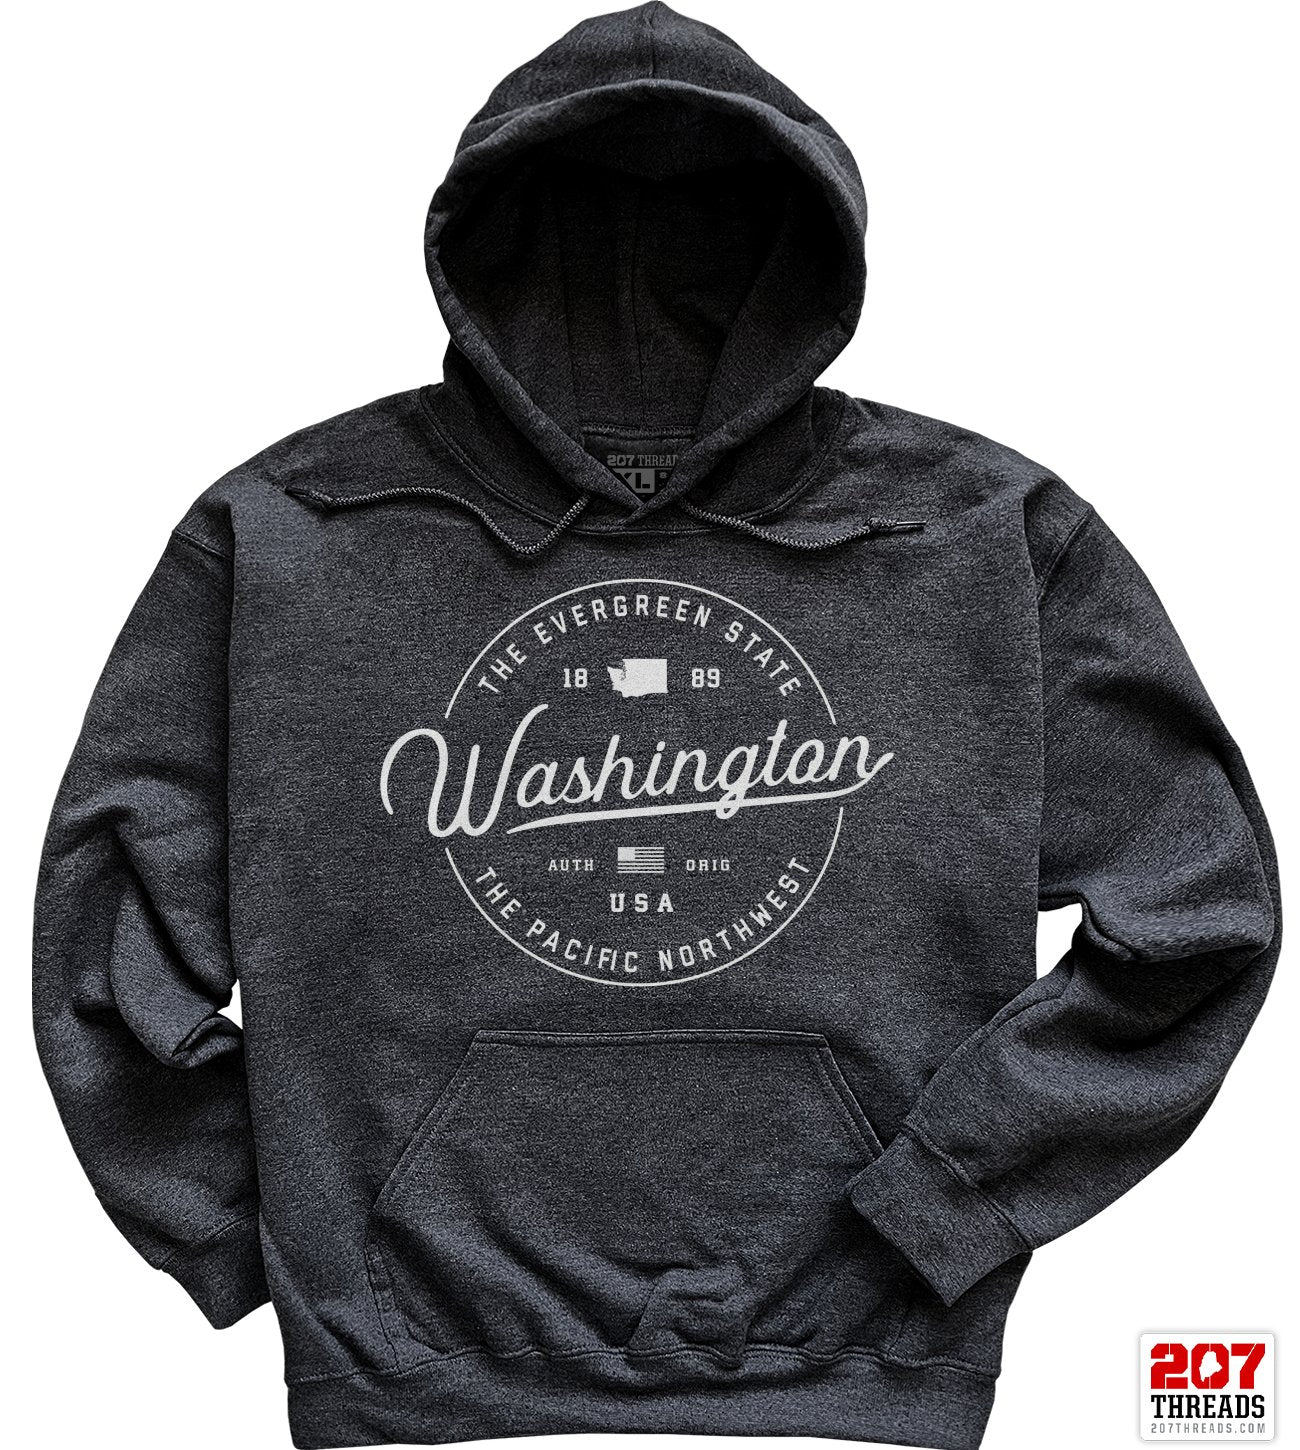 State of Washington Hoodie Sweatshirt